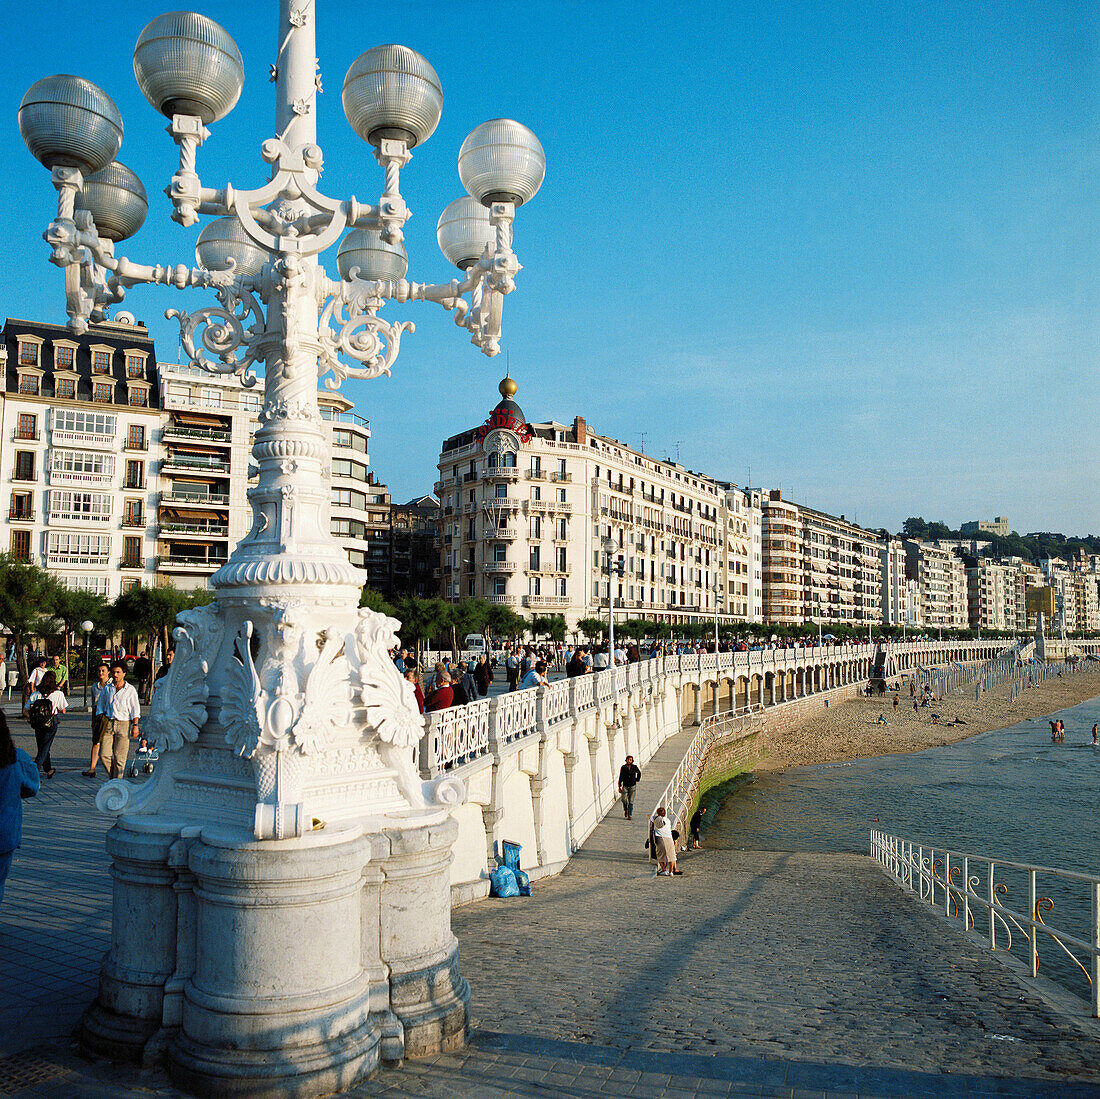 Hotel Londres and detail of street lamps. San Sebastián-Donostia. Guipúzcoa. Euskadi. Spain